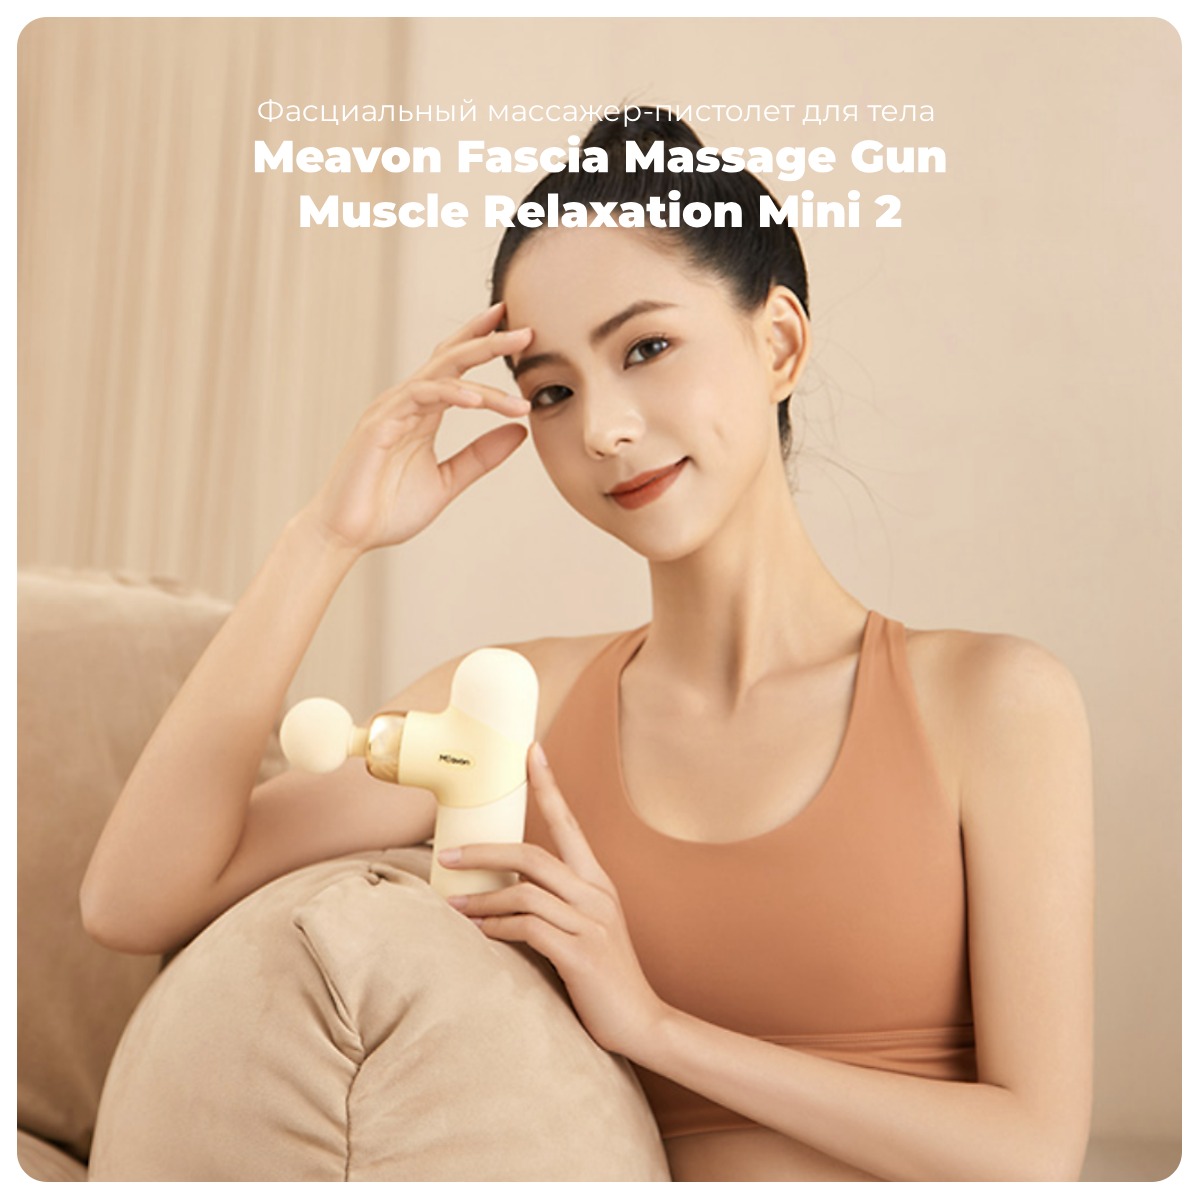 XiaoMi-Meavon-Fascia-Massage-Gun-Muscle-Relaxation-Mini-2-MVFG-M351-06